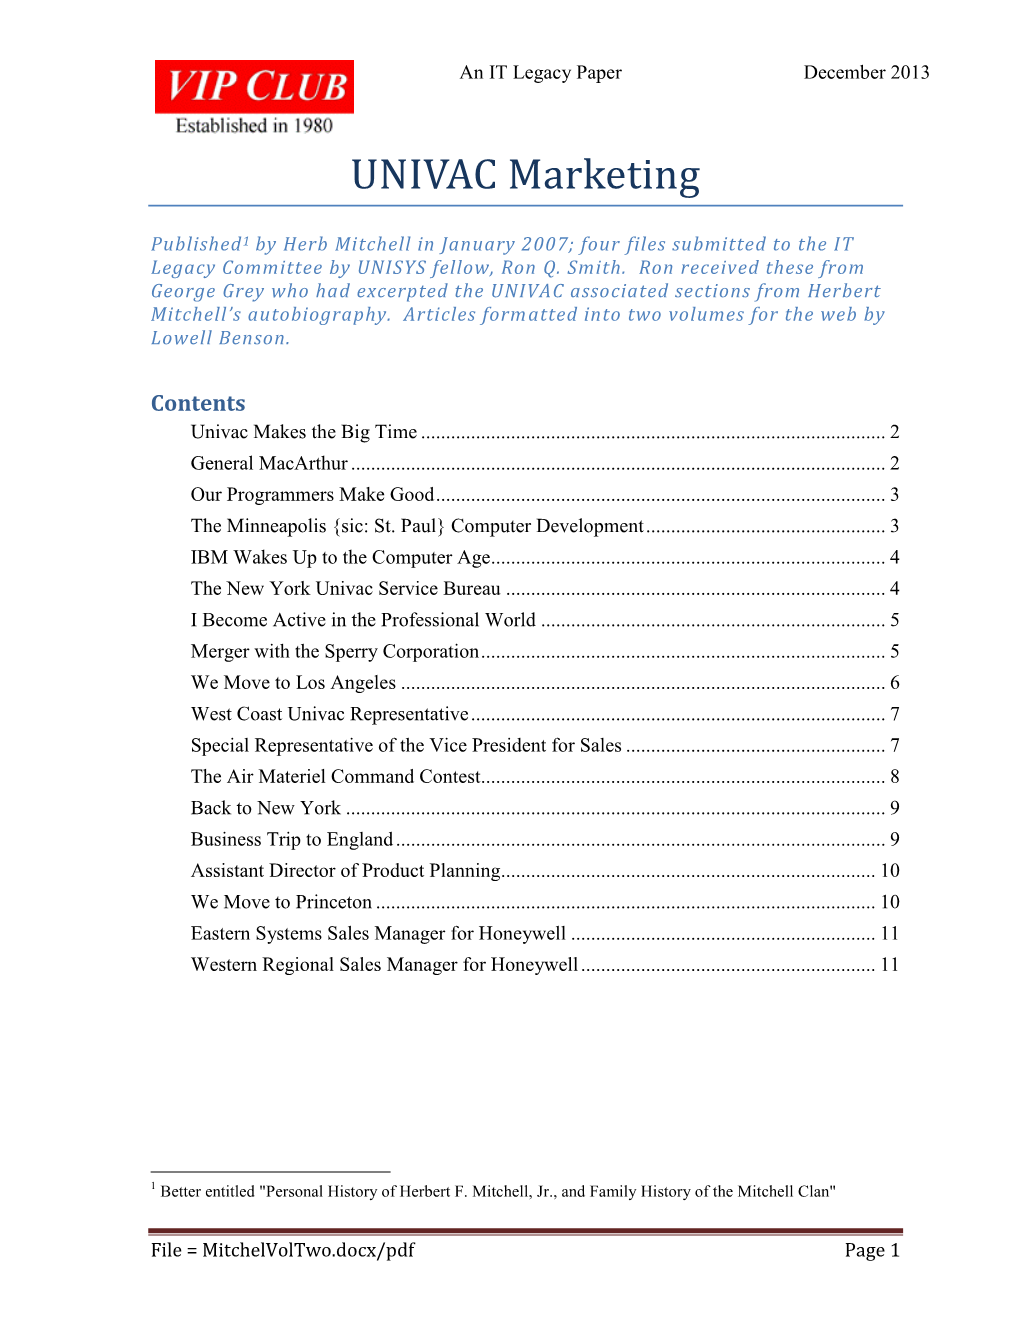 UNIVAC Marketing